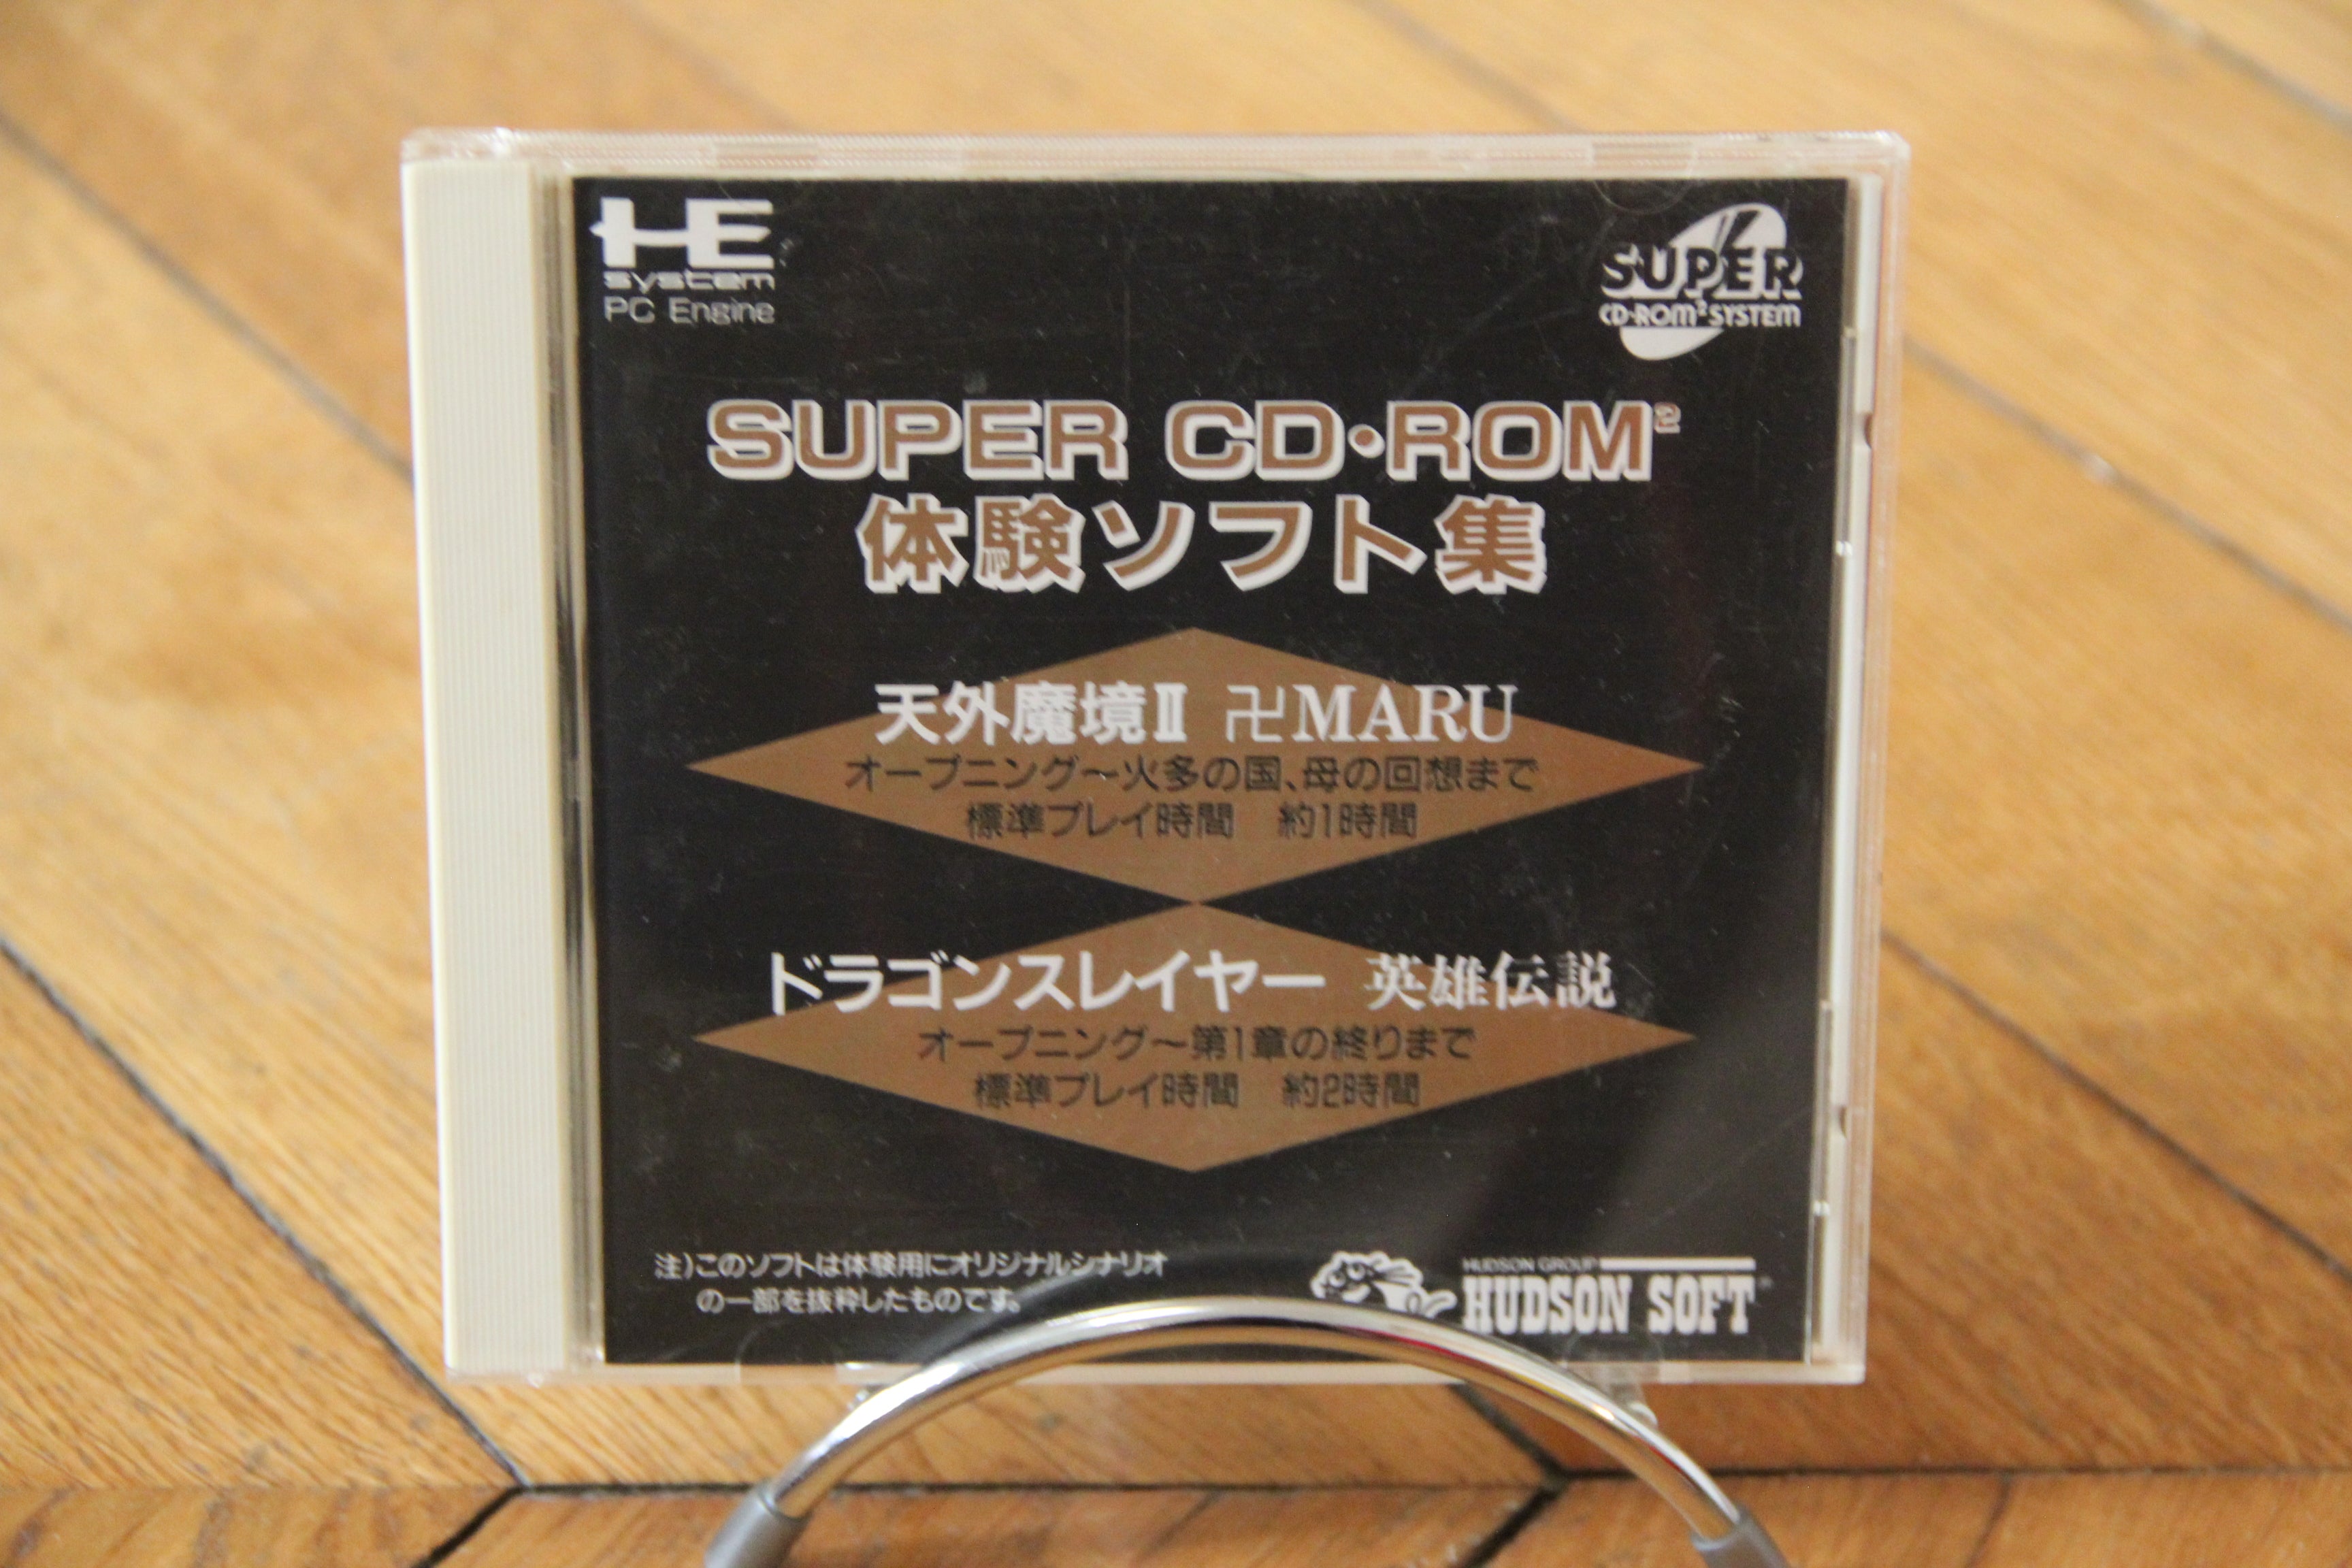 Super CD-Rom Disc Pc Engine NEC Games Jeux Super CD-Rom Japan HCD1027 Boxed